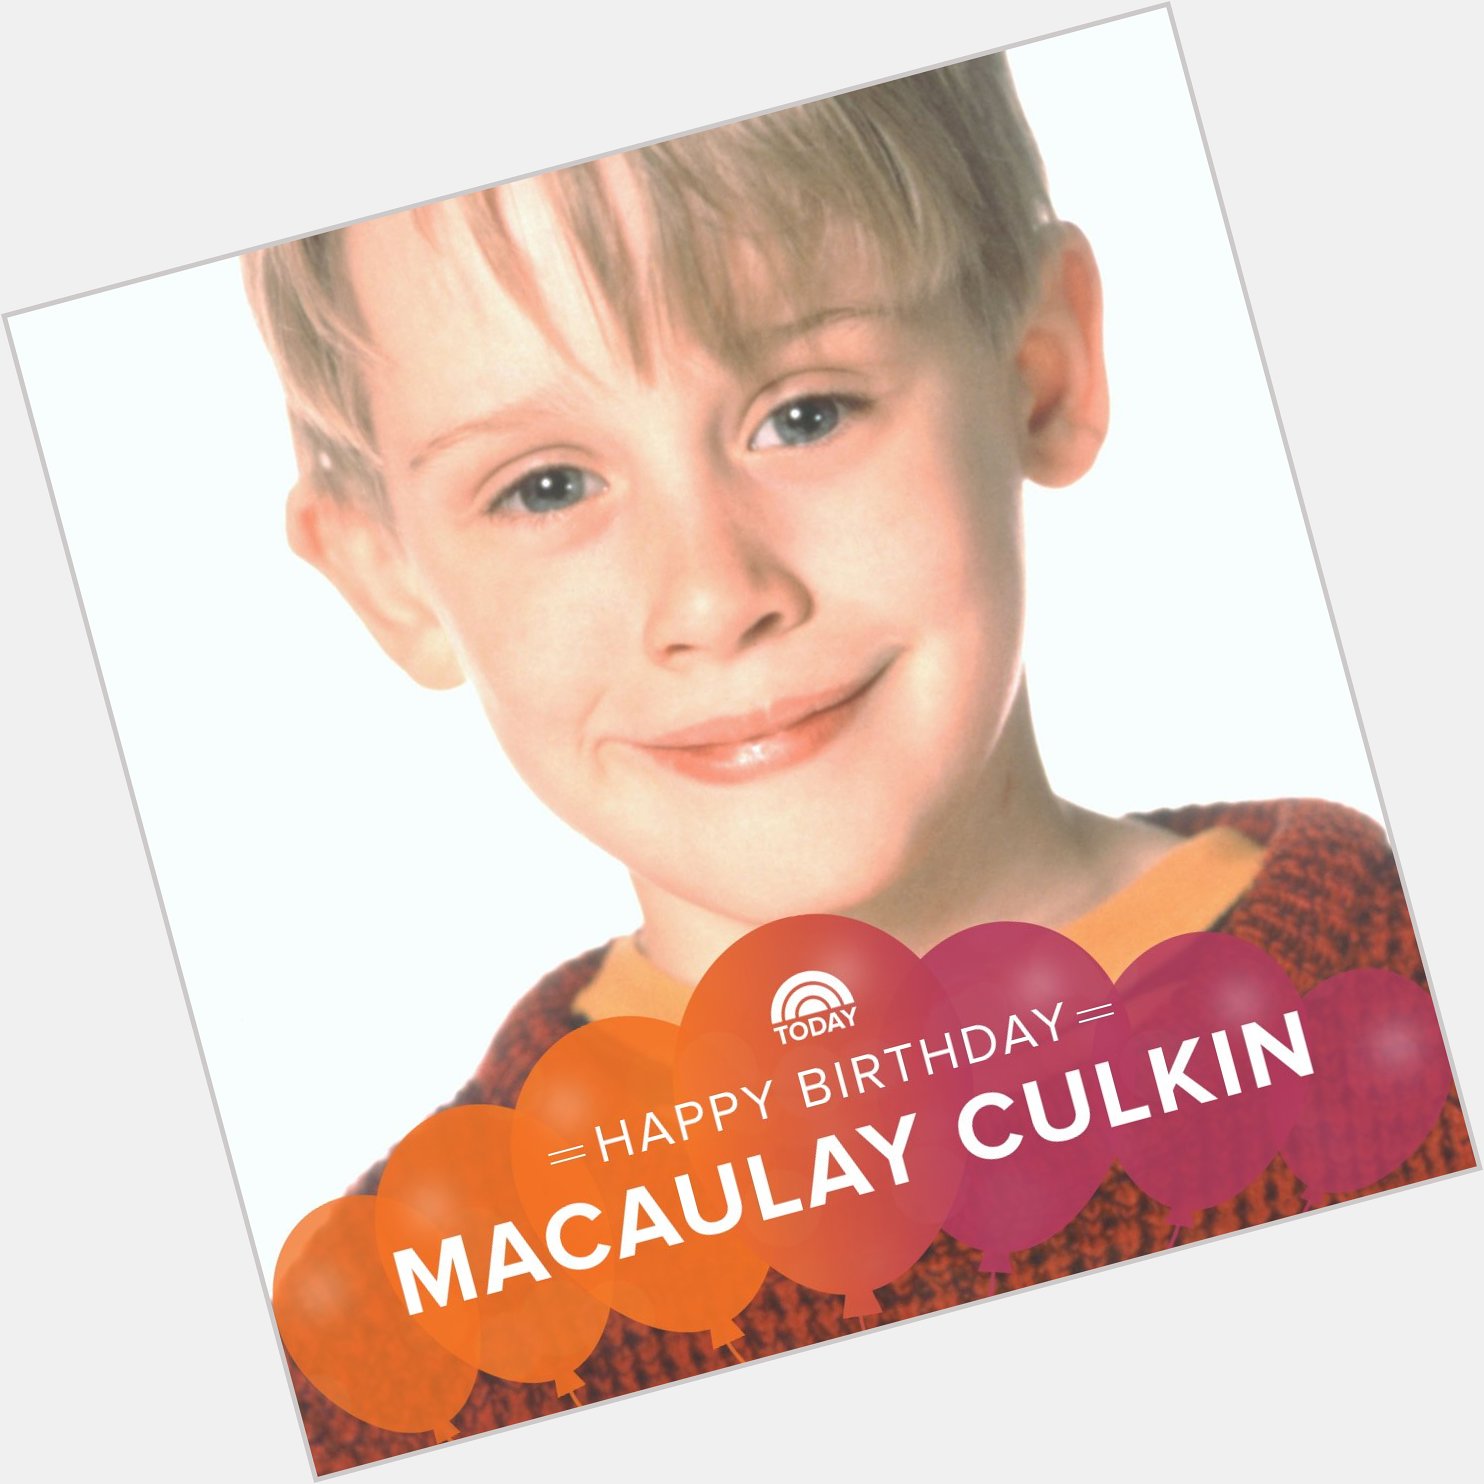 Happy birthday, Macaulay Culkin!  